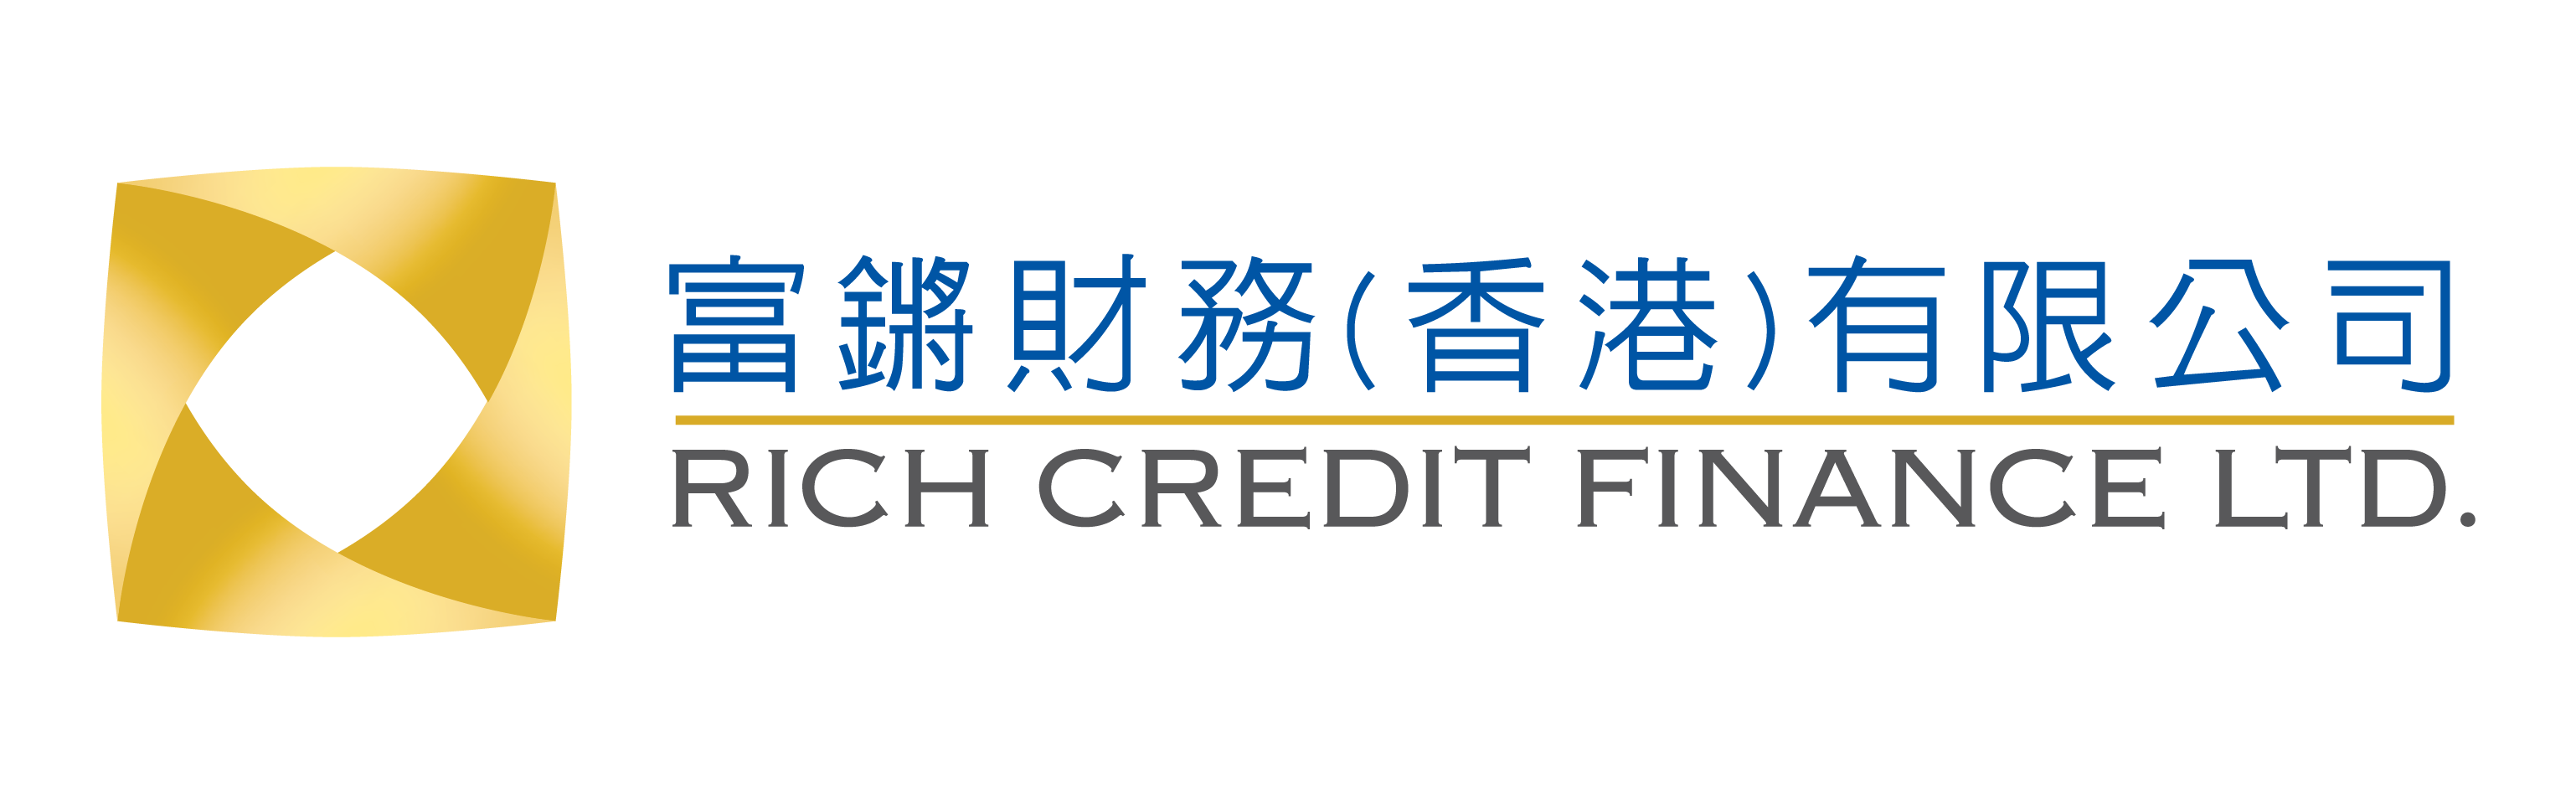 Rich Credit Finance Limited Logo